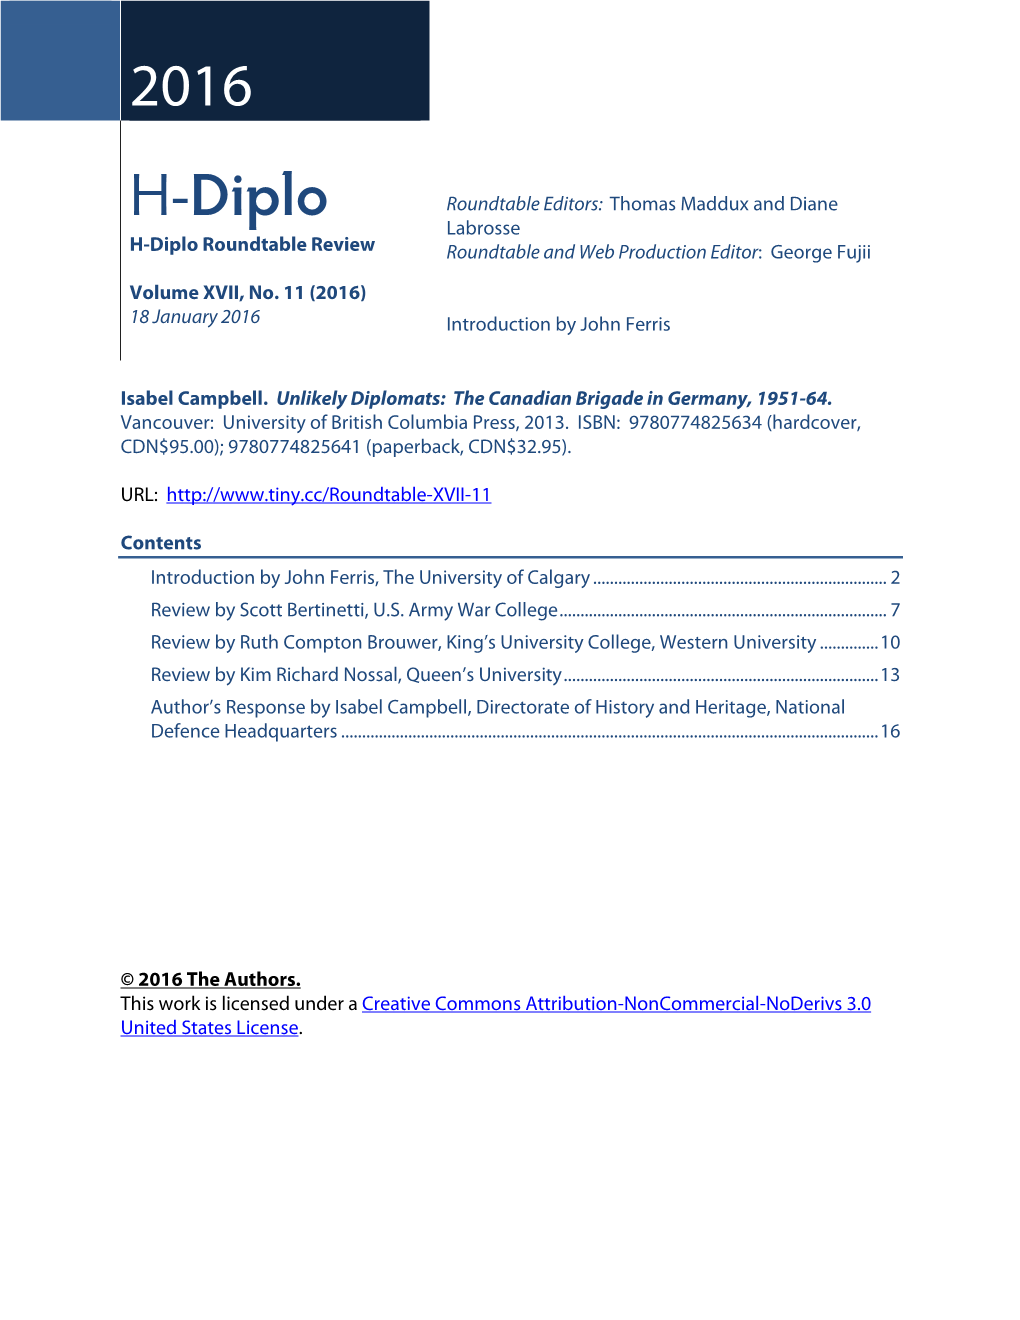 H-Diplo Roundtable, Vol. XVII